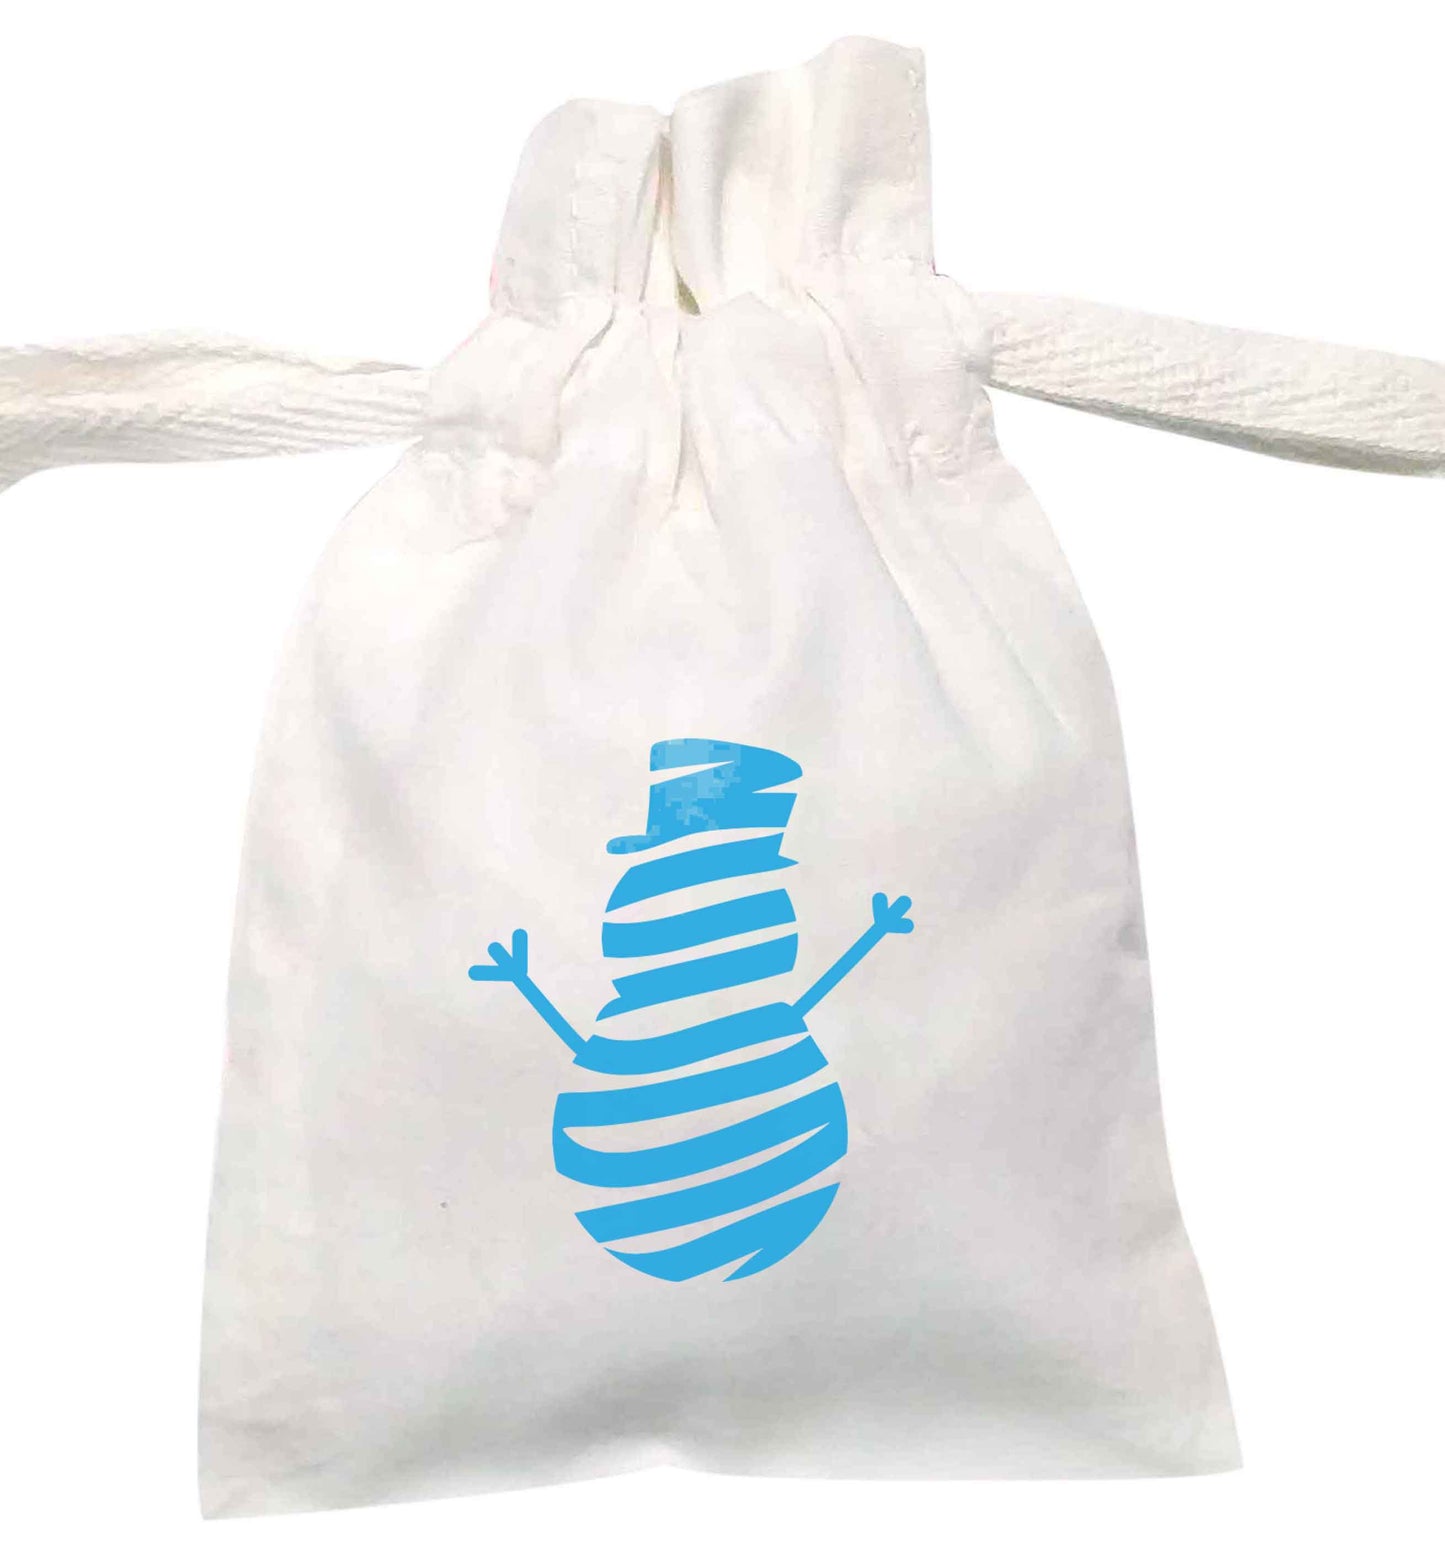 Snowman Snowglobe | XS - L | Pouch / Drawstring bag / Sack | Organic Cotton | Bulk discounts available!